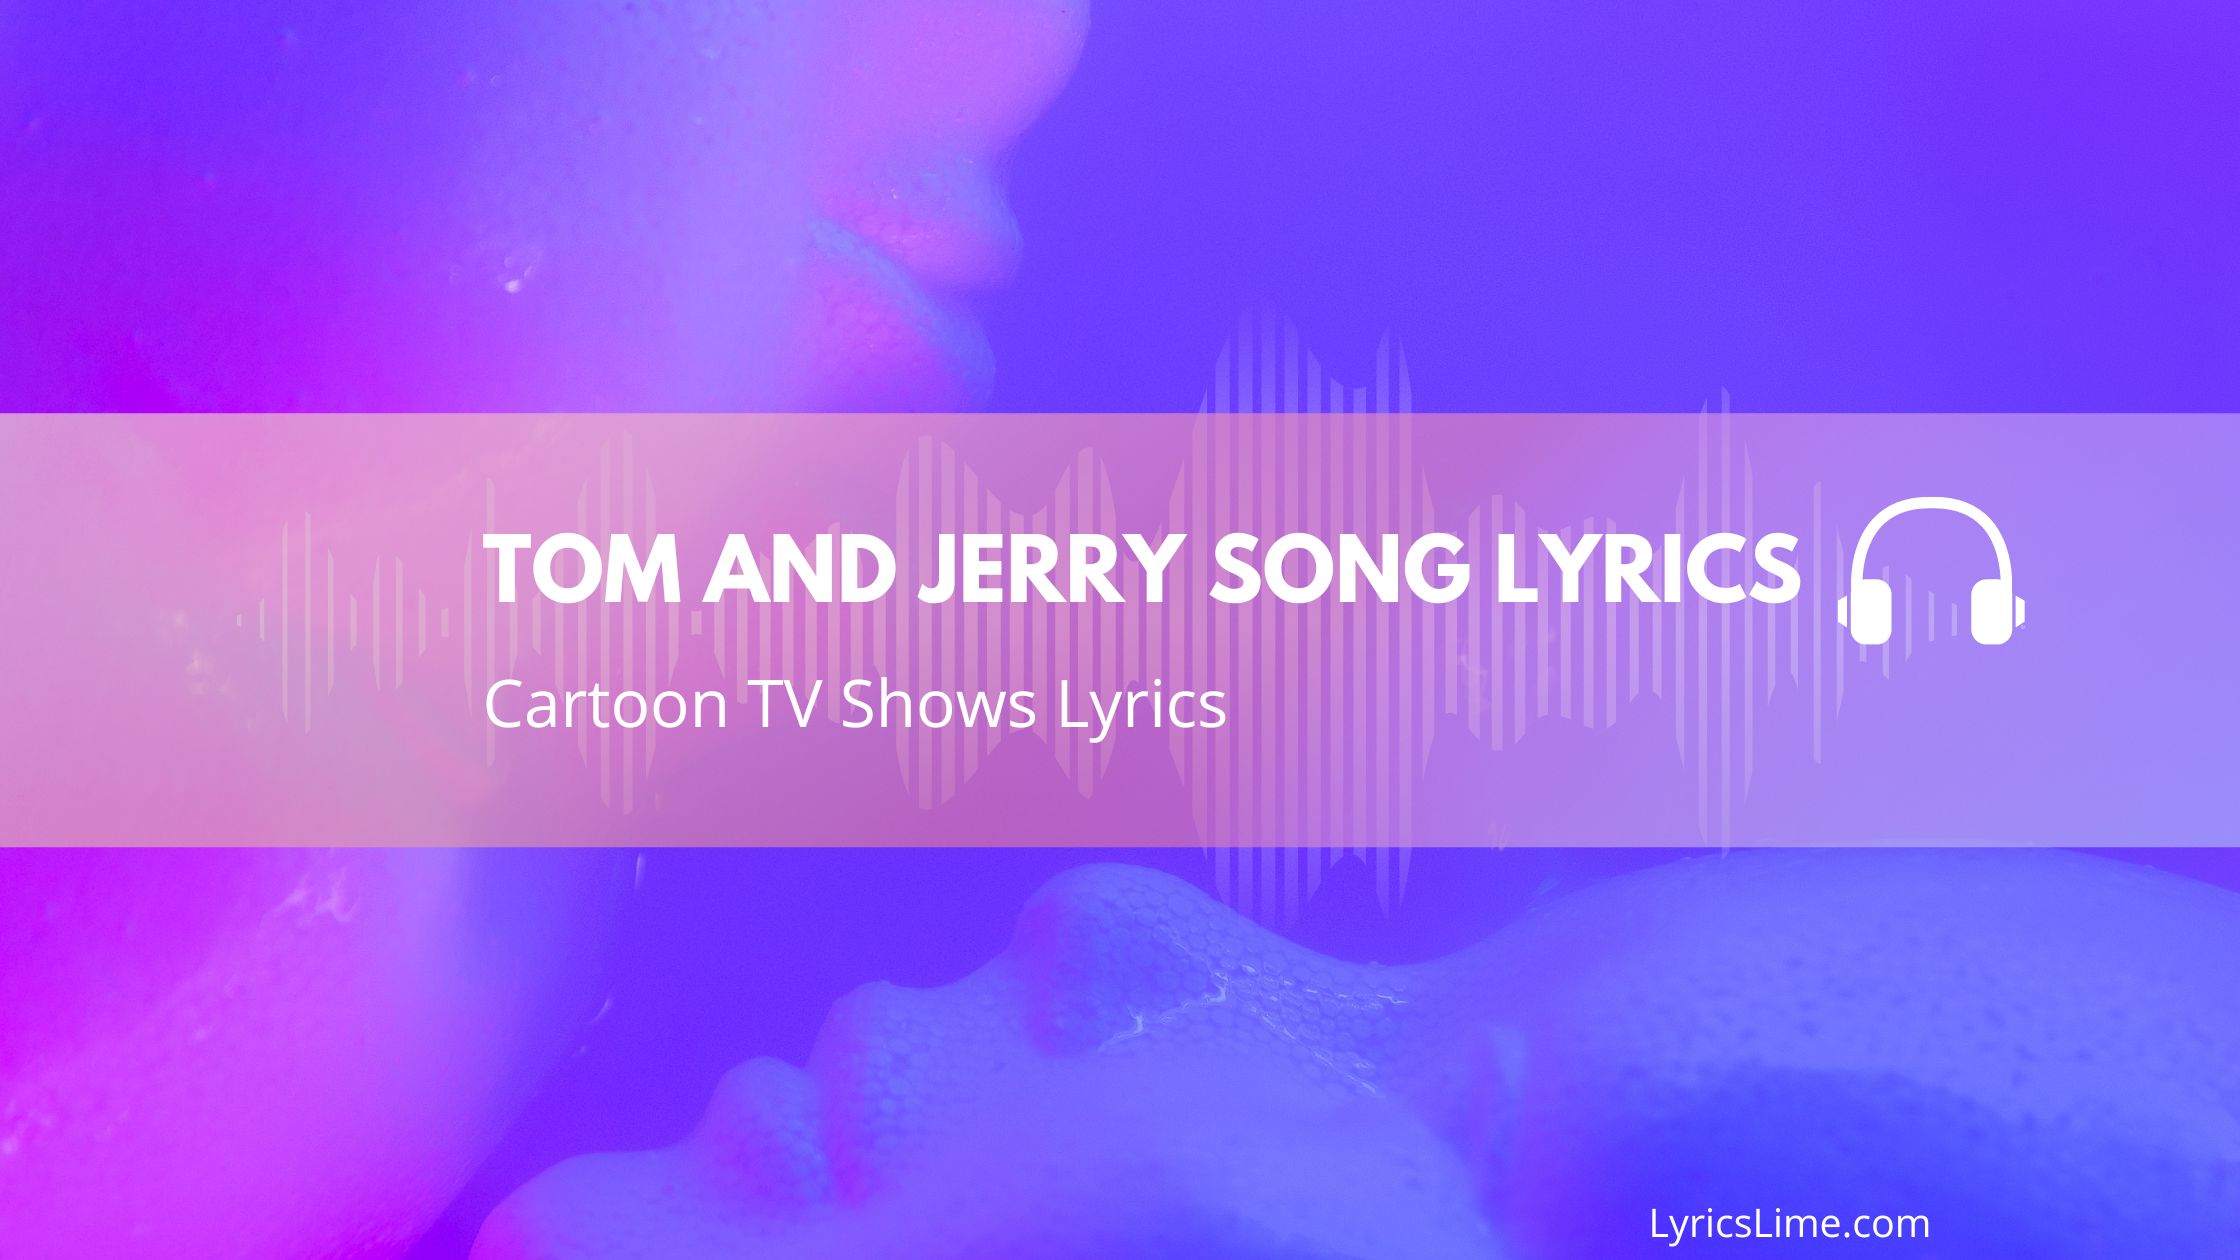 Tom and Jerry Song Lyrics